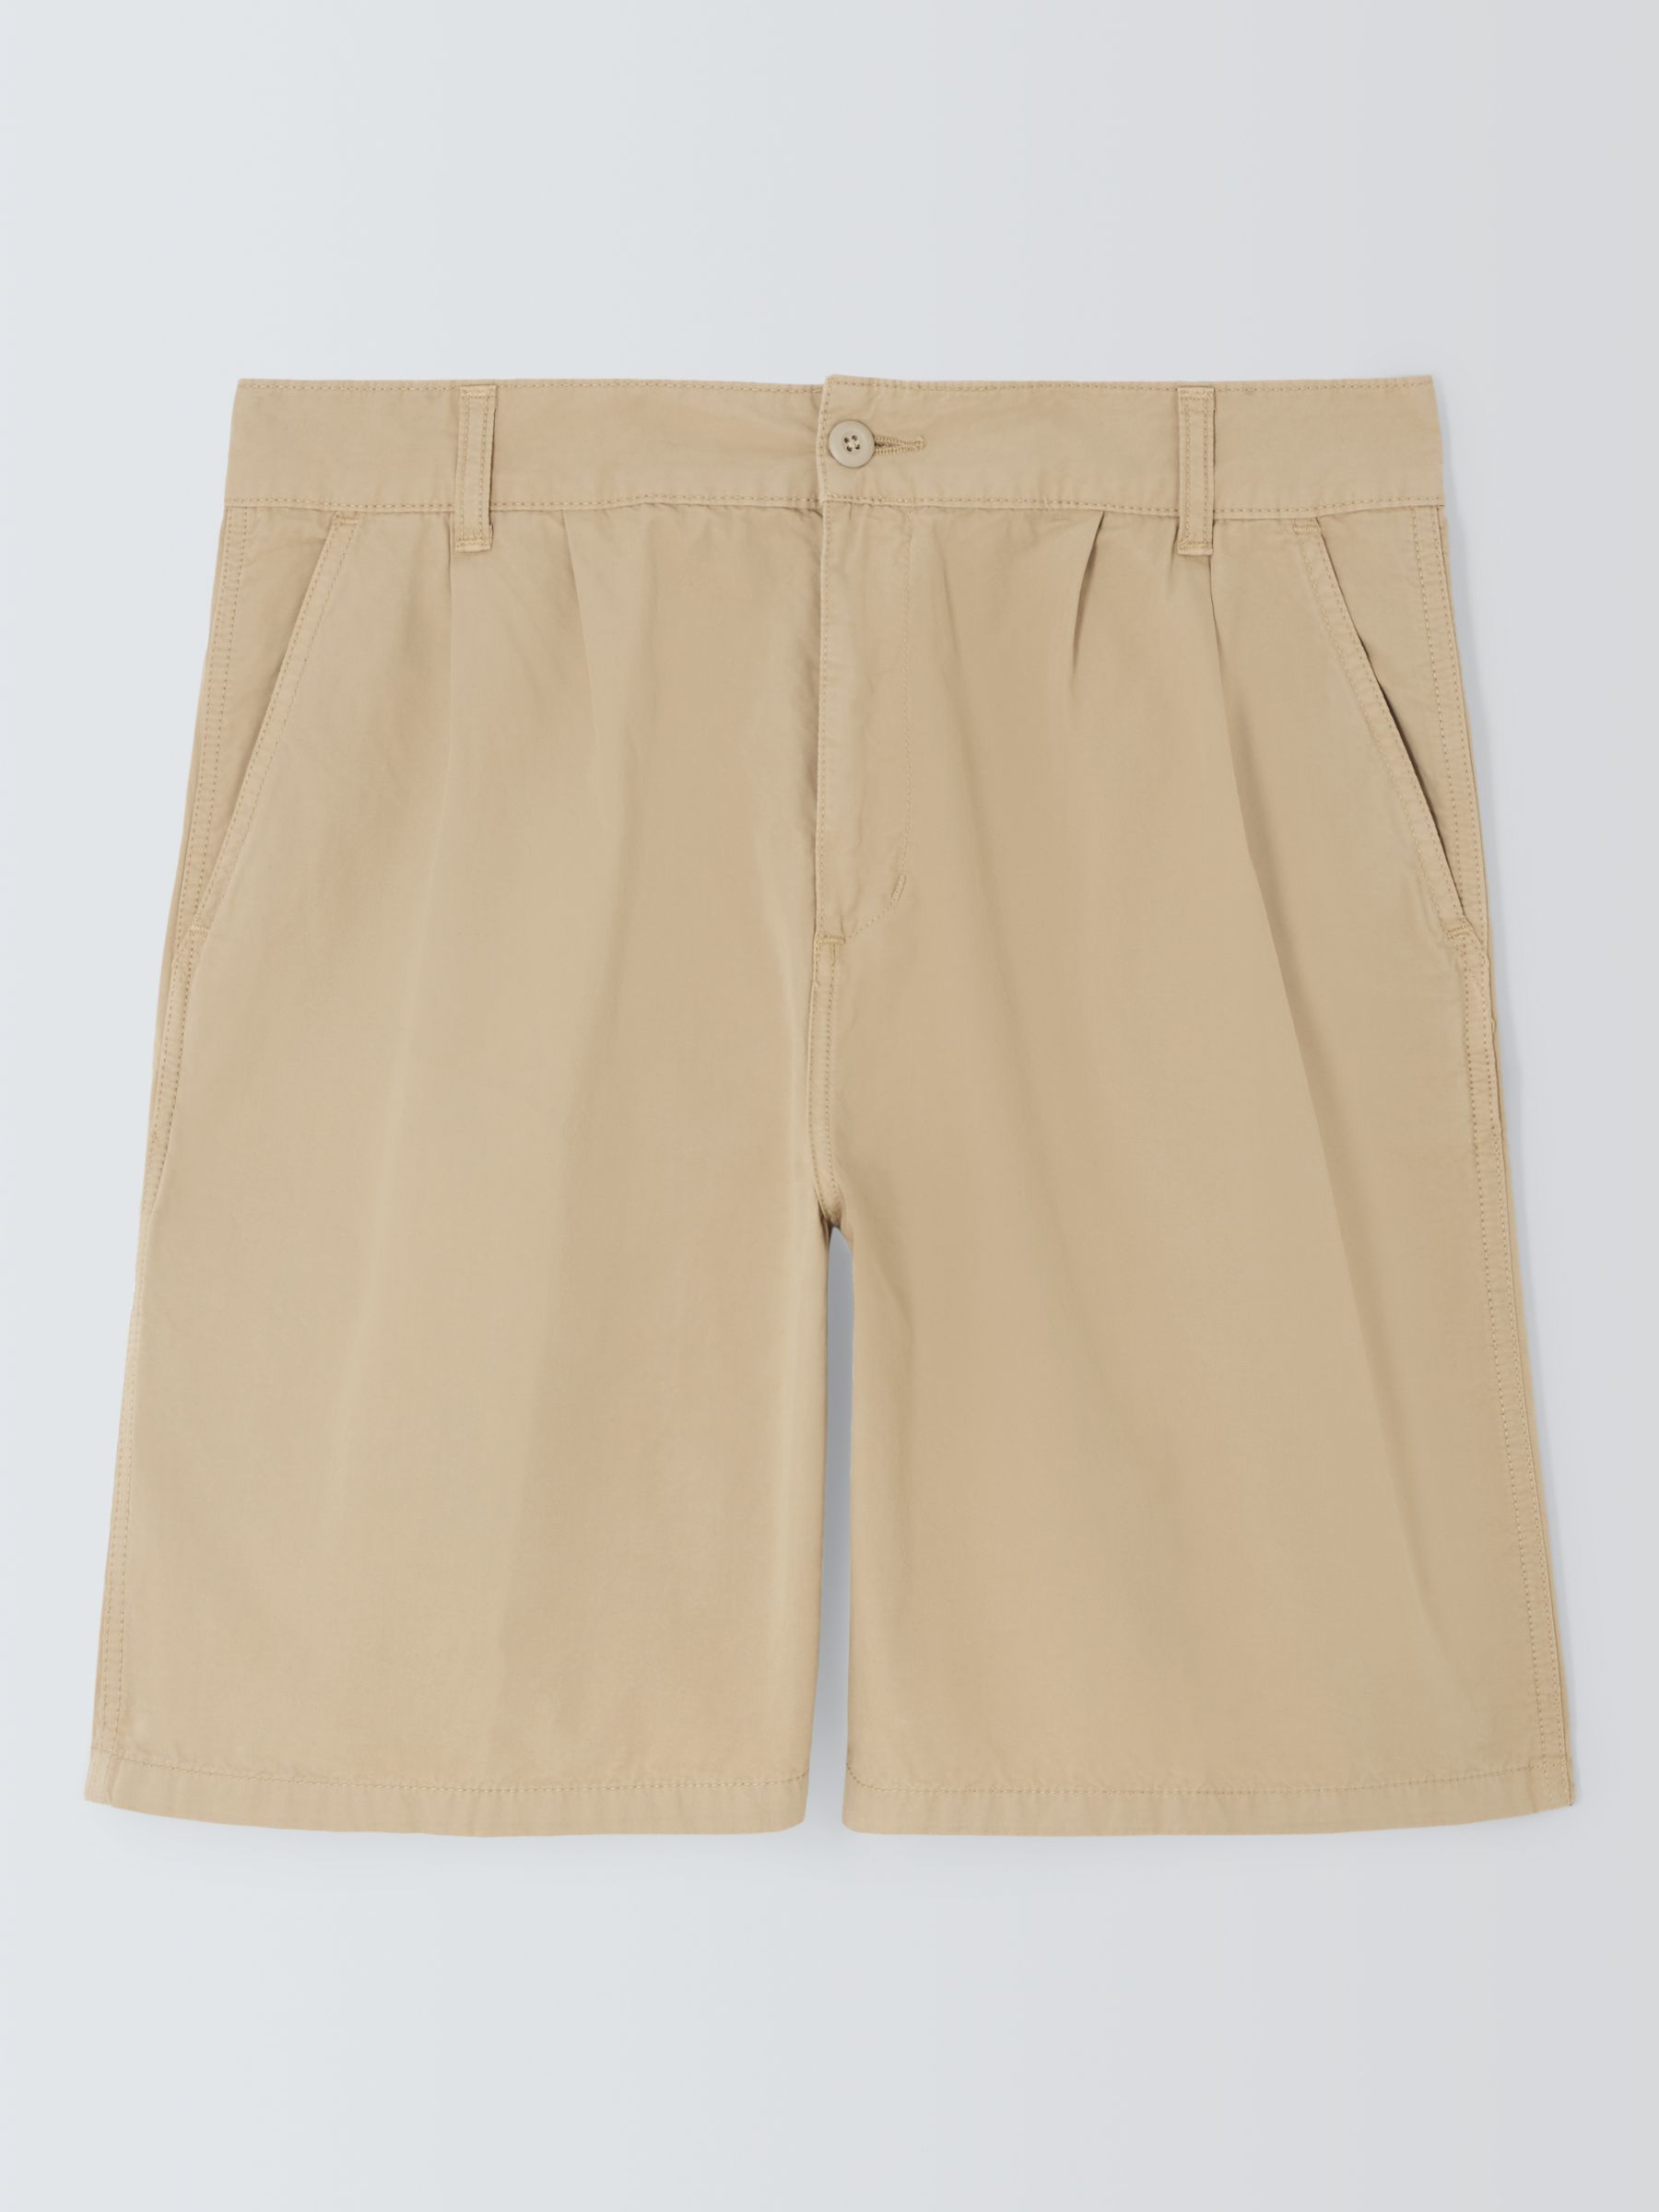 Carhartt WIP Colston Shorts, Brown, 38R